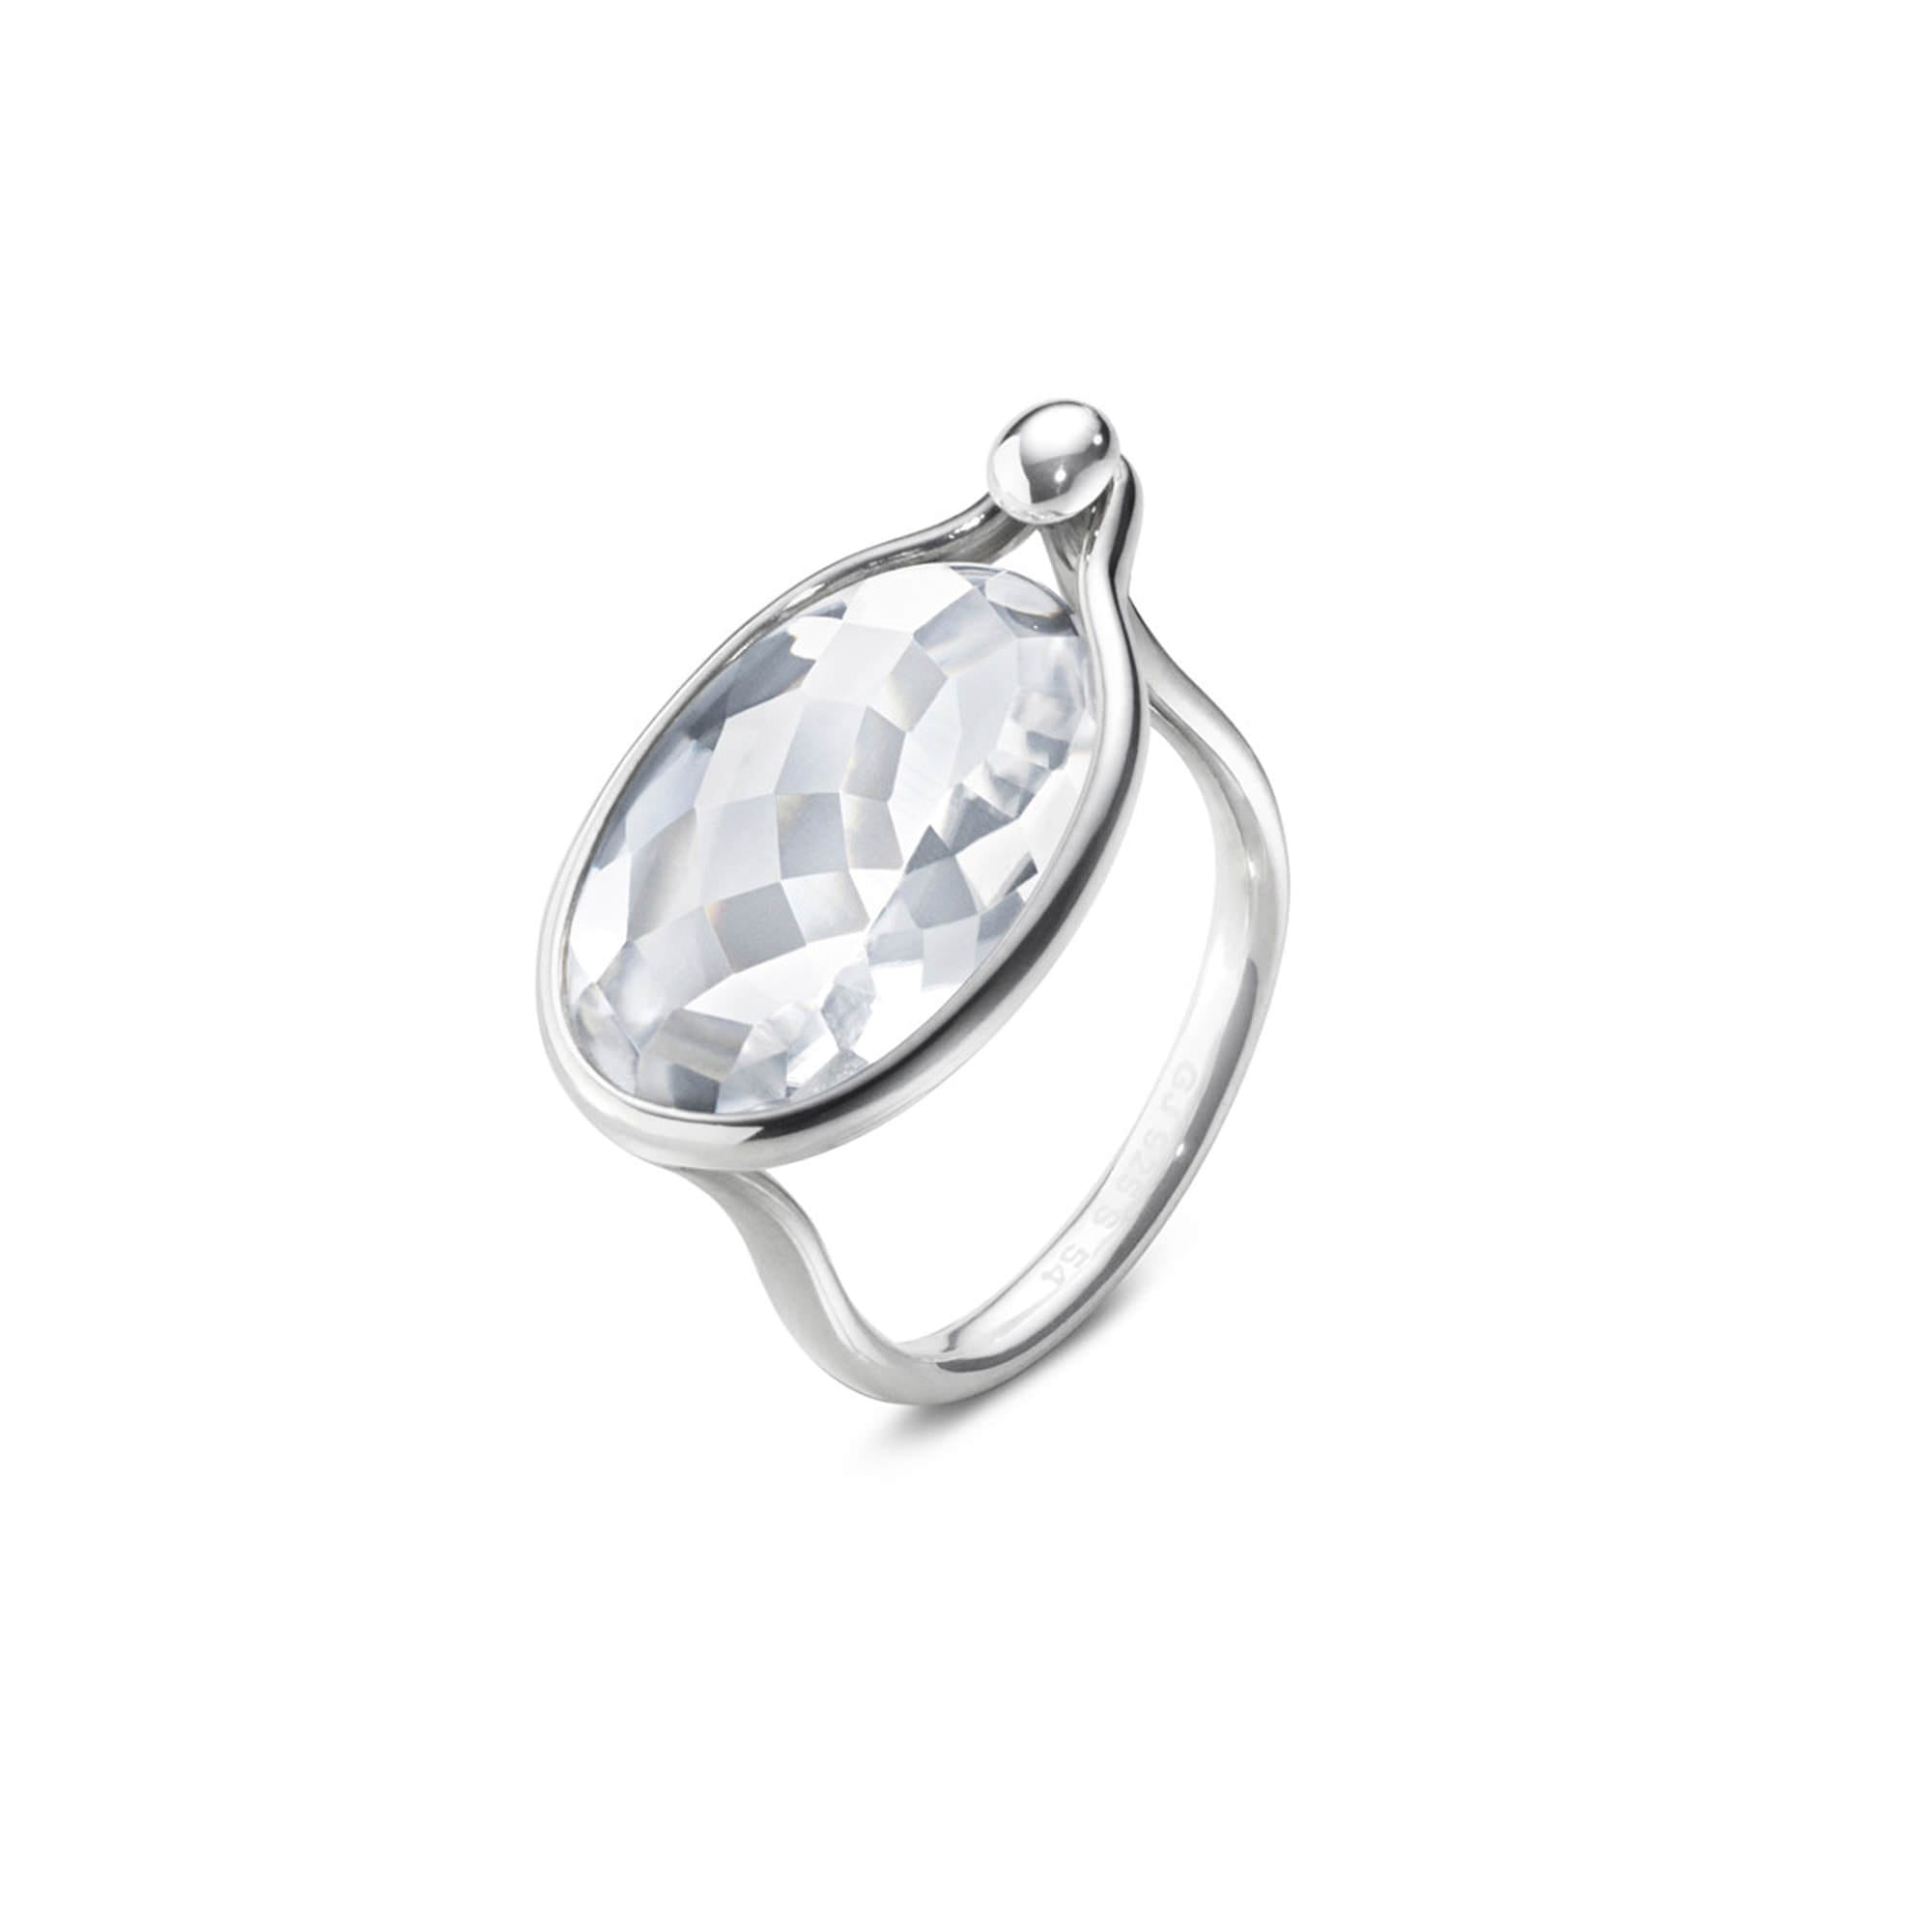 Savannah Large Sterling Silver & Rock Crystal Ring